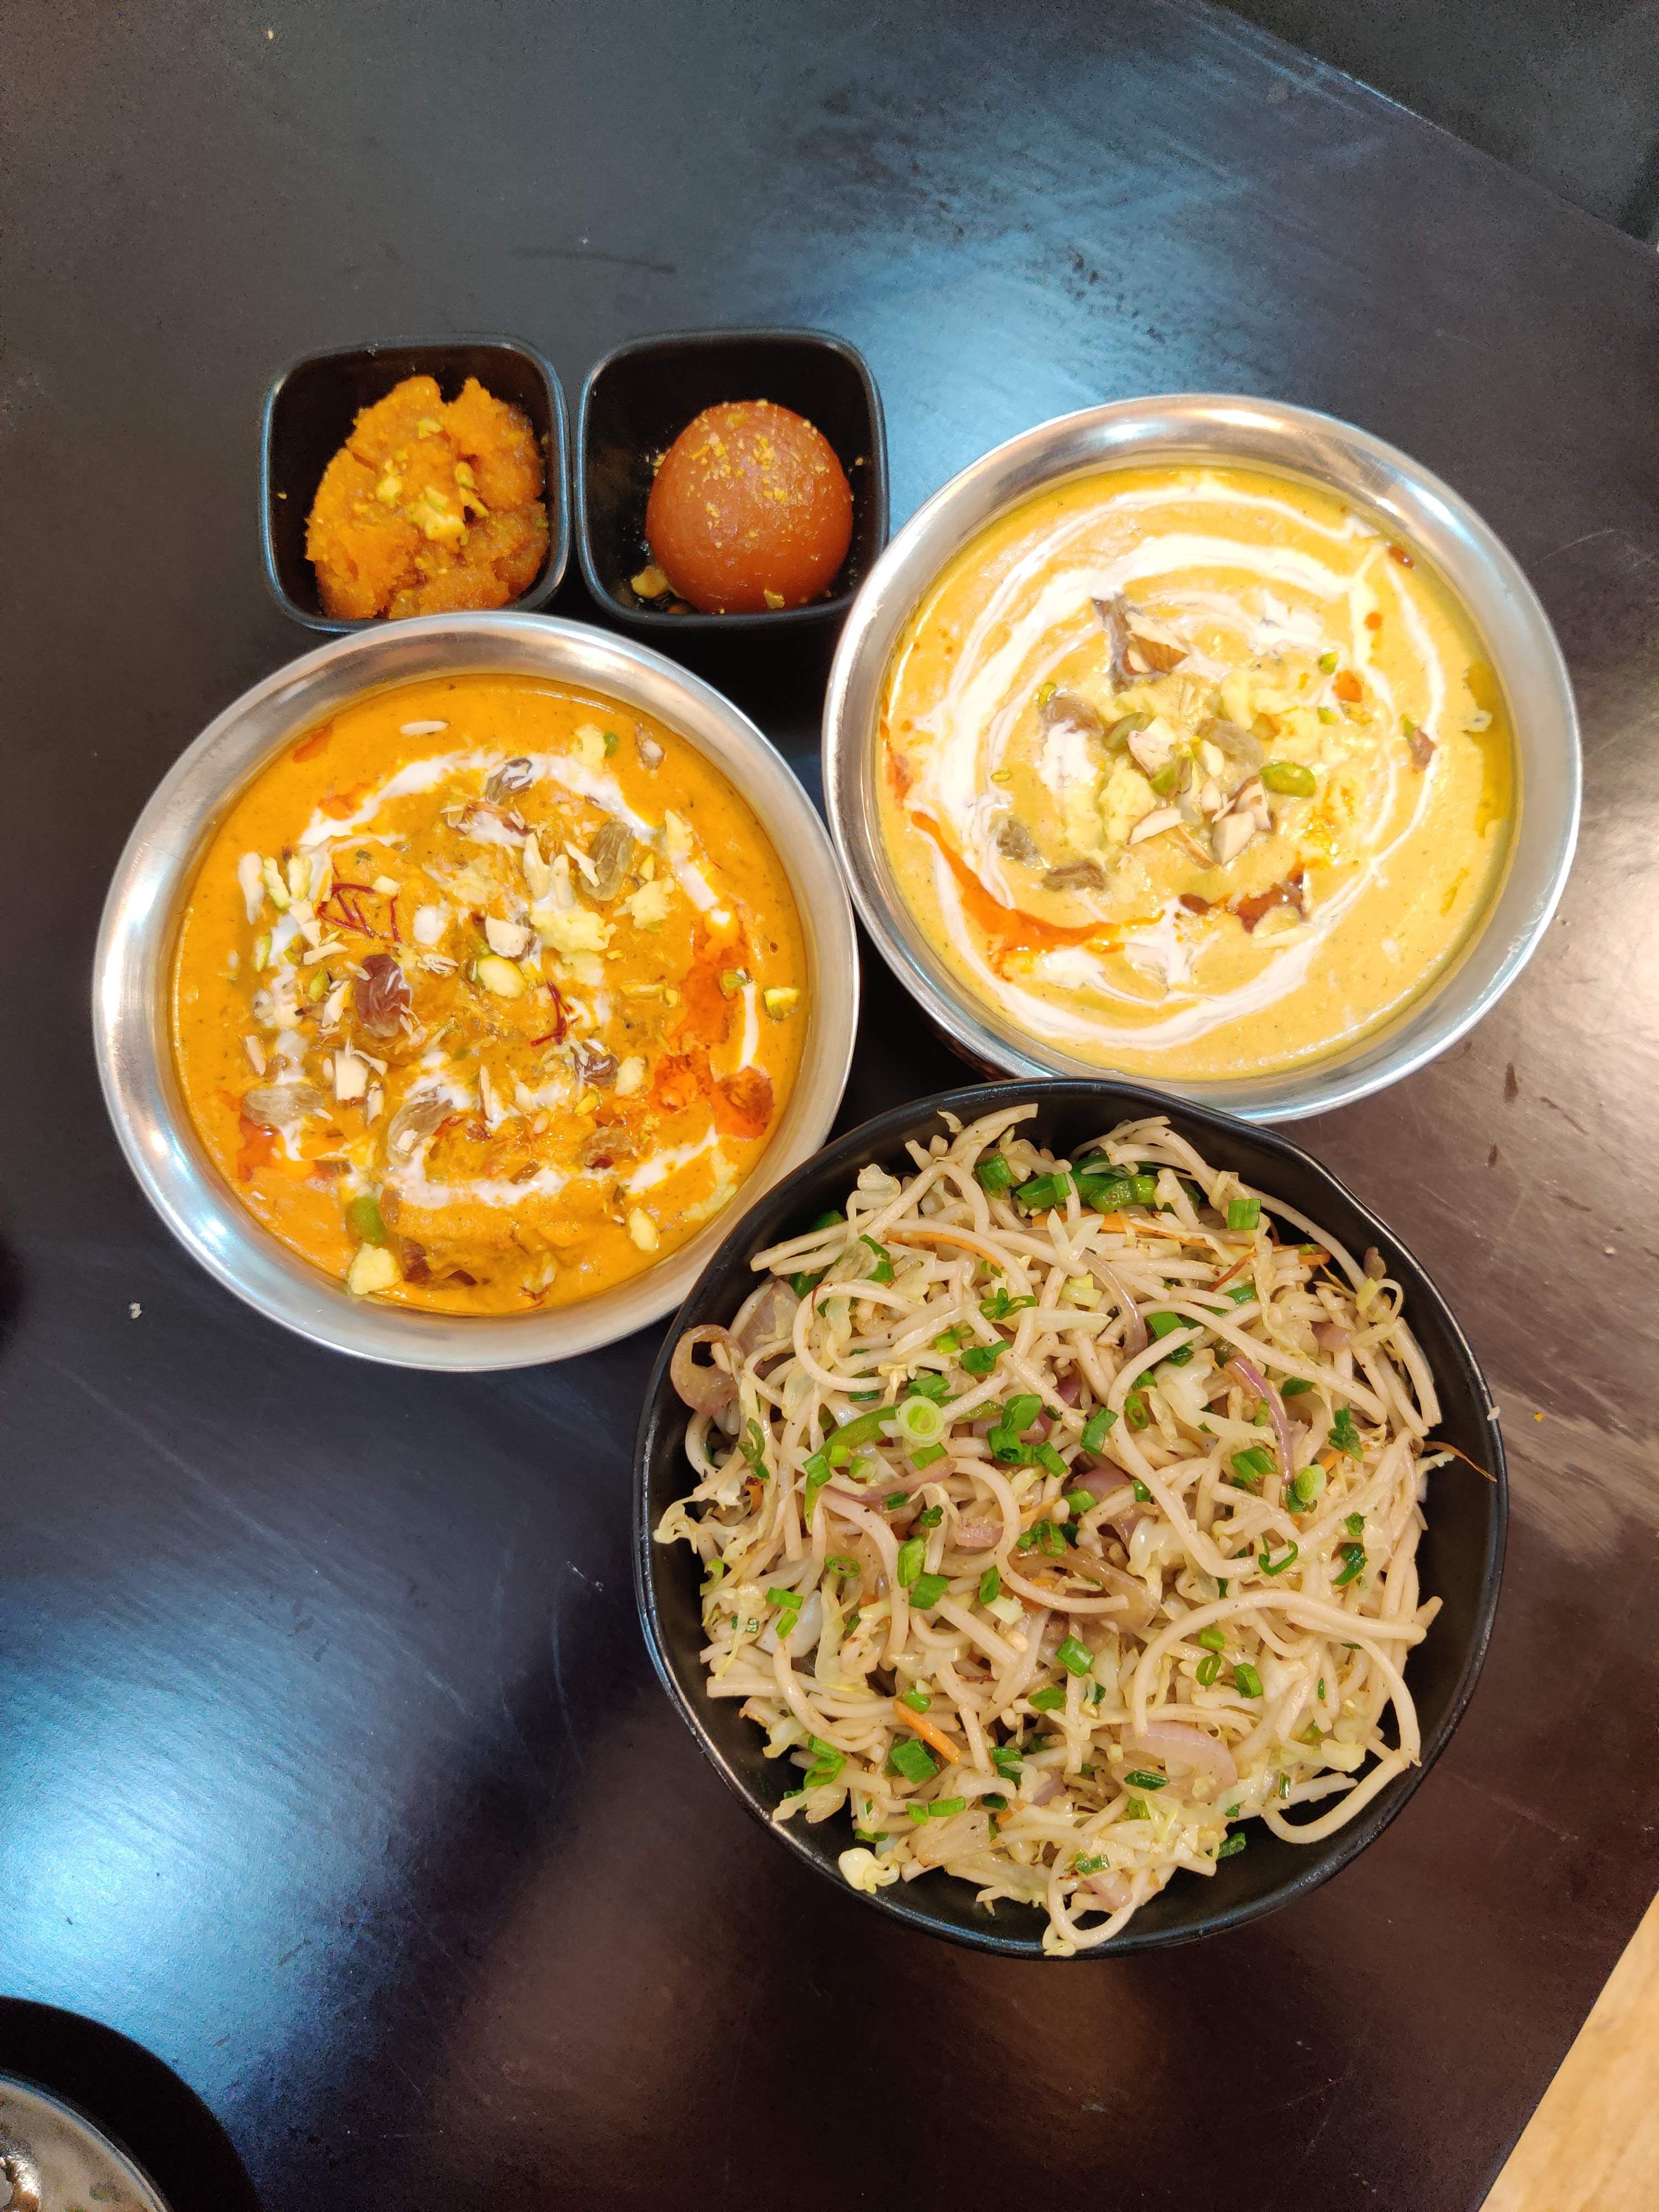 Dish,Food,Cuisine,Ingredient,Produce,Recipe,Meal,Indian cuisine,Thai food,Curry